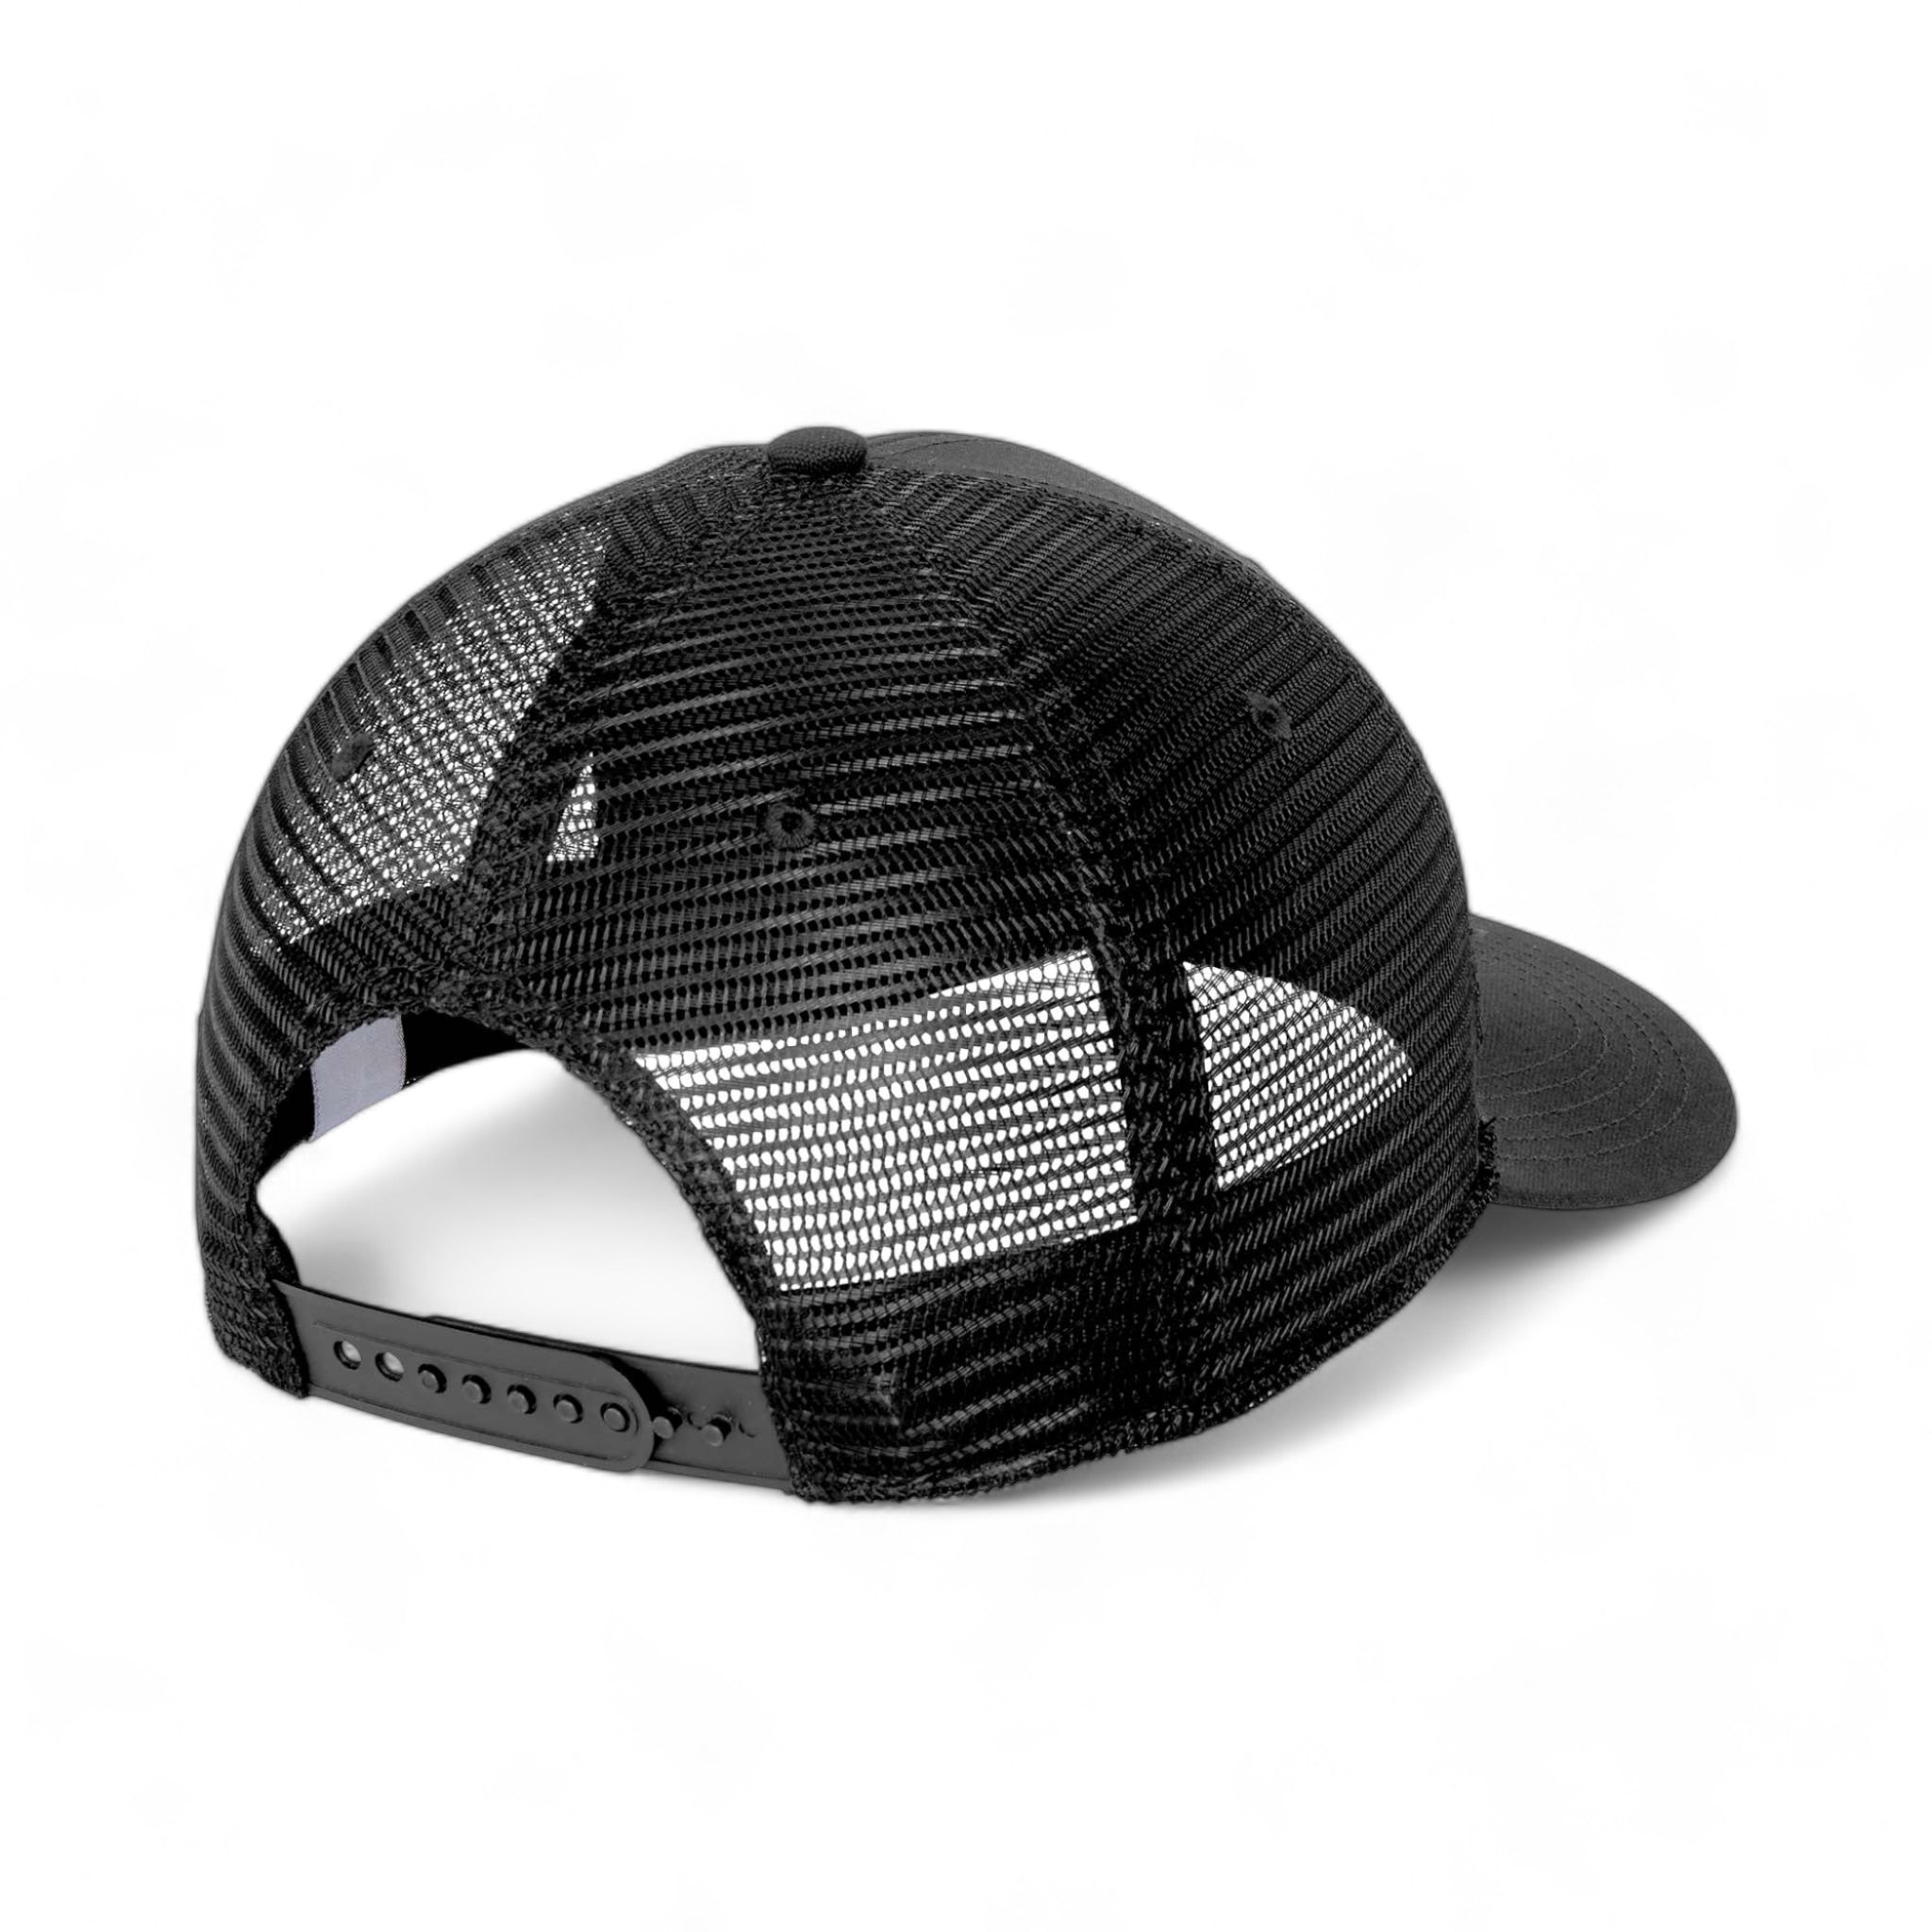 Back view of Carhartt CT105298 custom hat in black